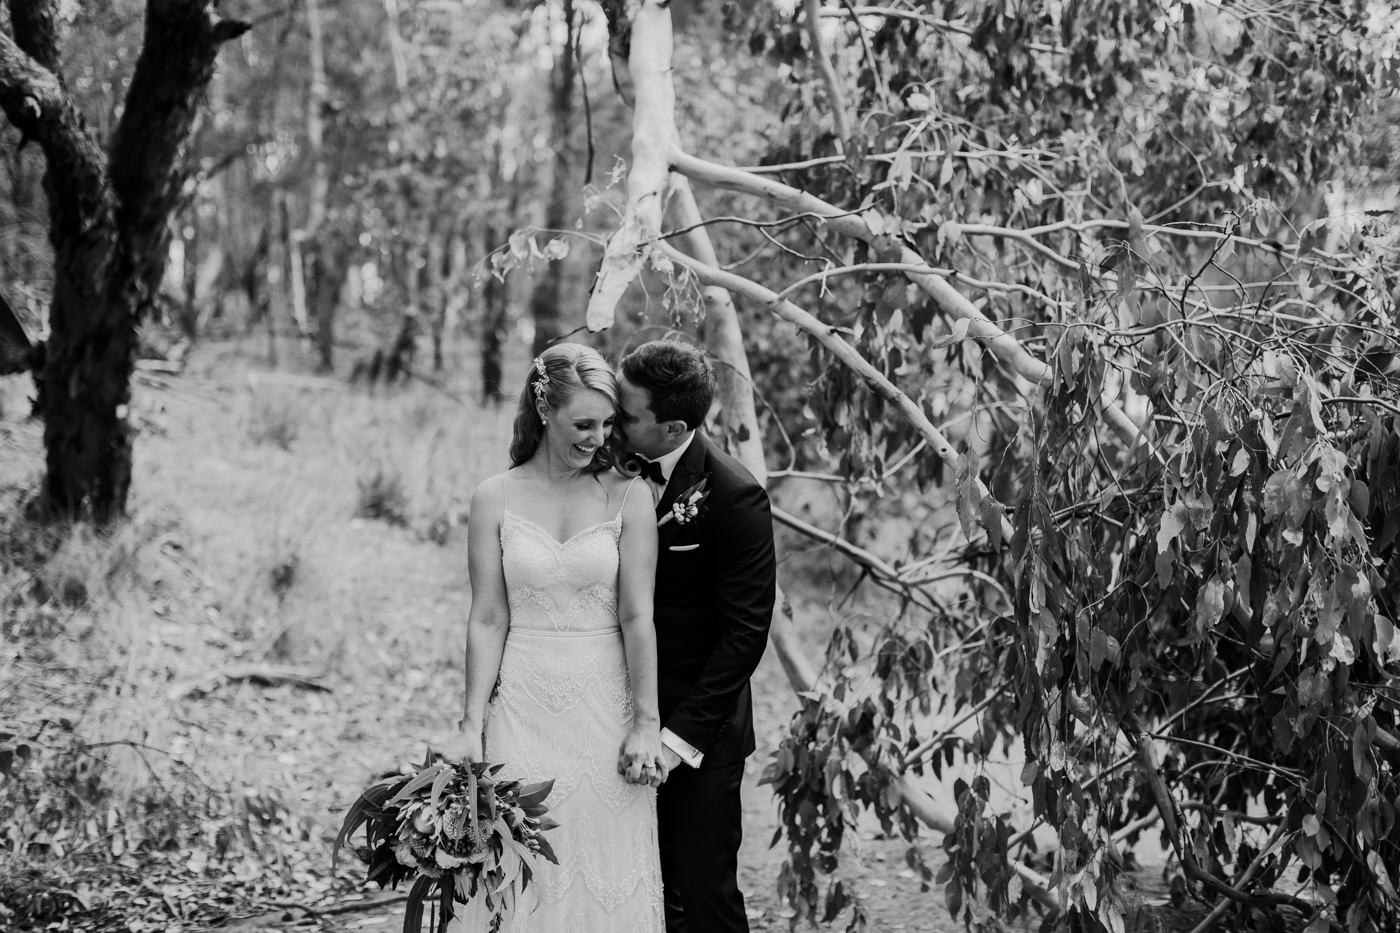 Anthony & Eliet - Wagga Wagga Wedding - Country NSW - Samantha Heather Photography-61.jpg